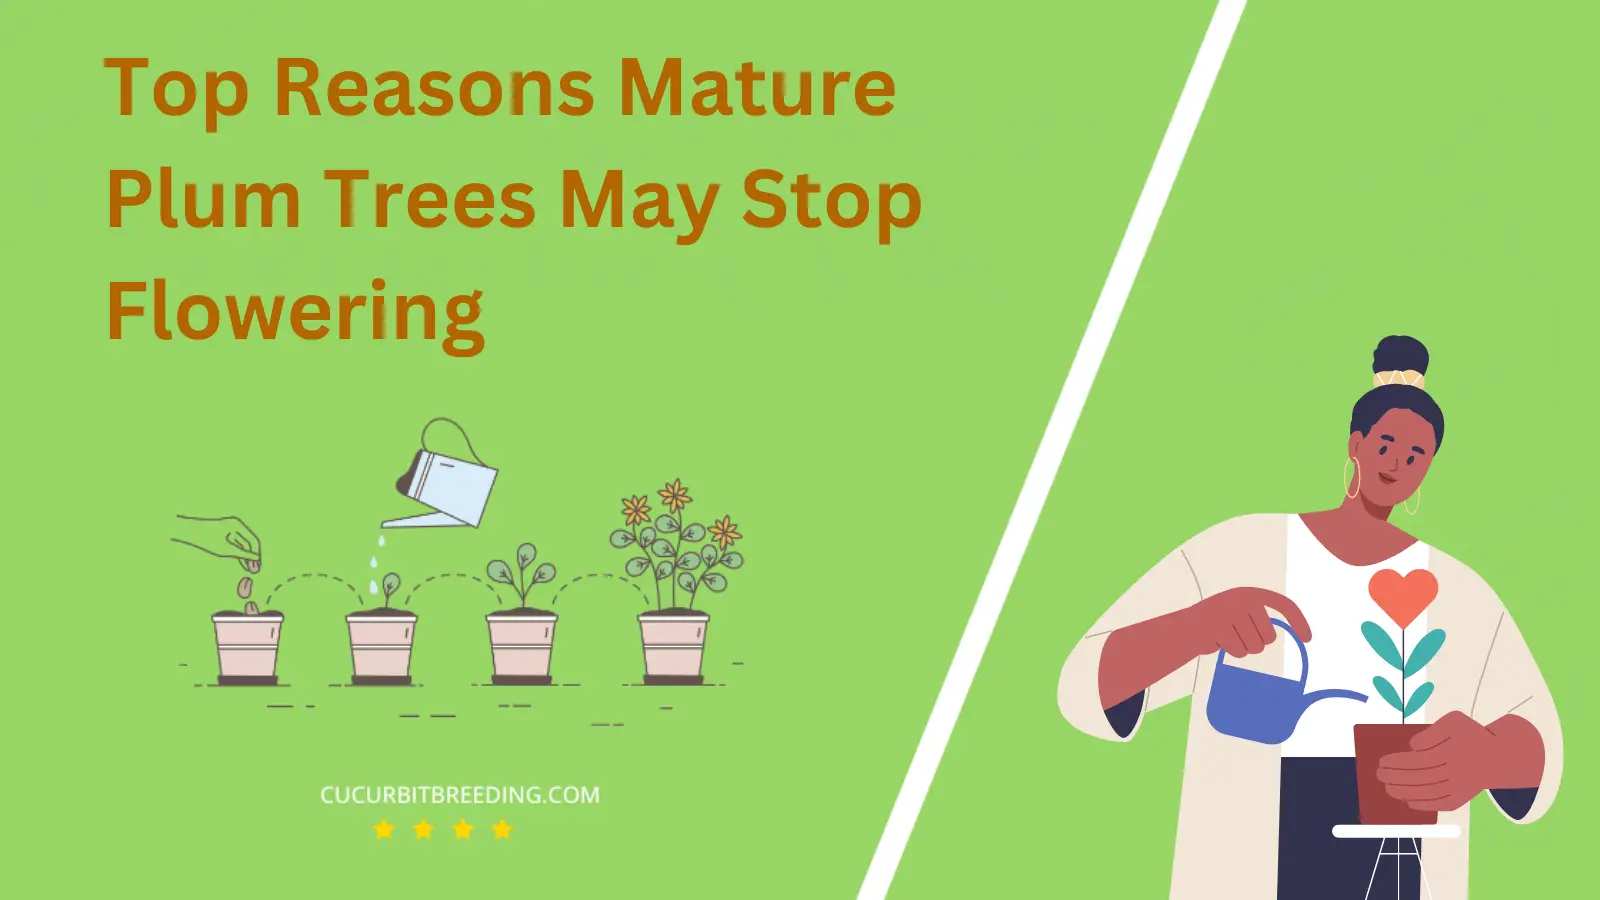 Top Reasons Mature Plum Trees May Stop Flowering